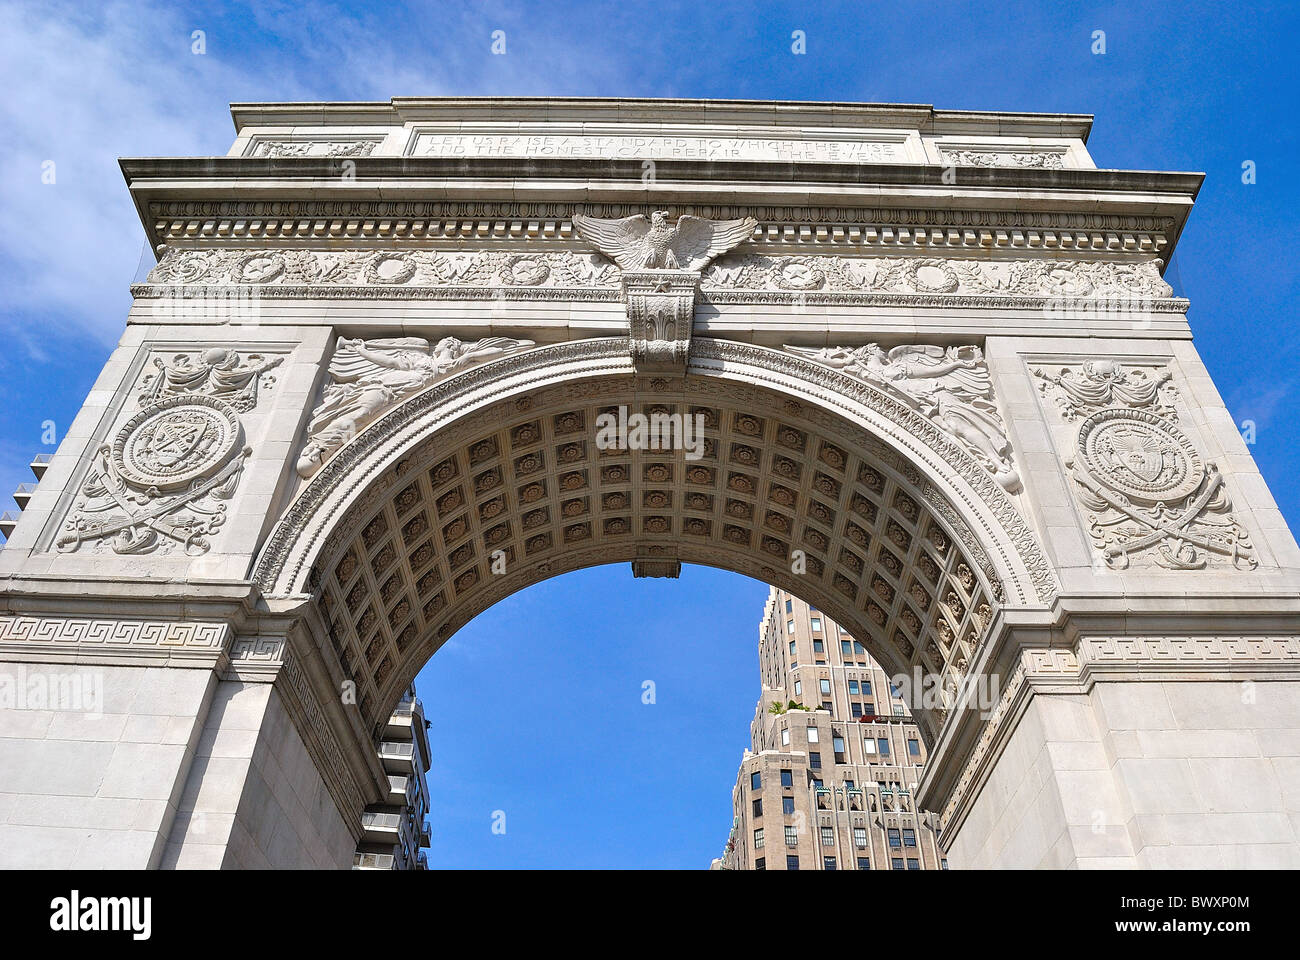 Washington Square Arch at Washington Square Park in New York, New York, USA Stock Photo